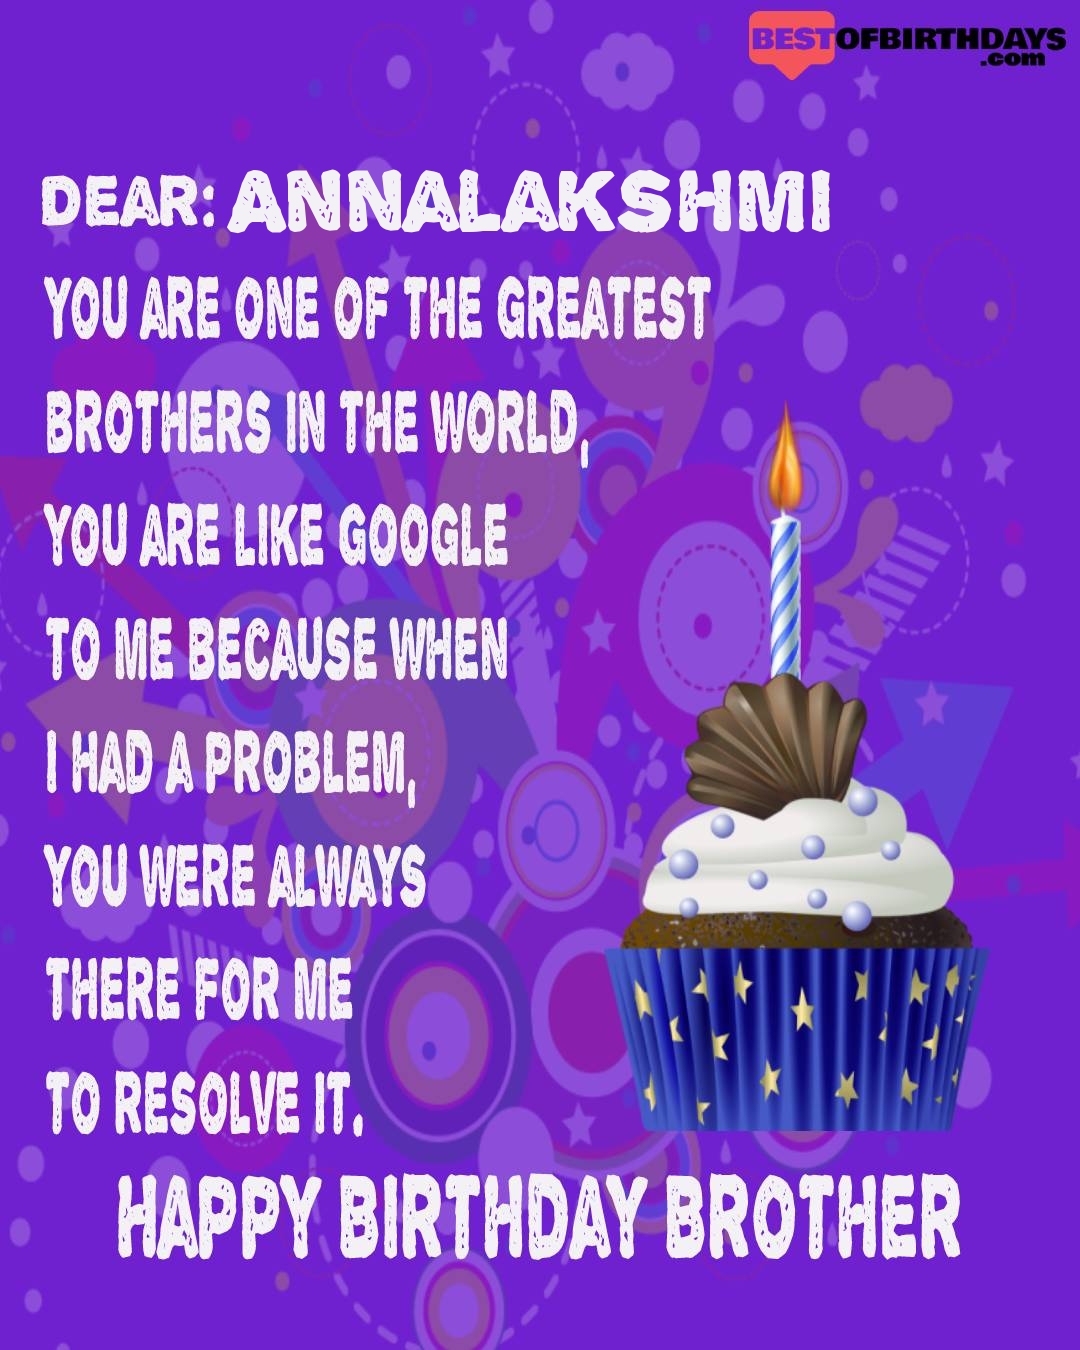 Happy birthday annalakshmi bhai brother bro